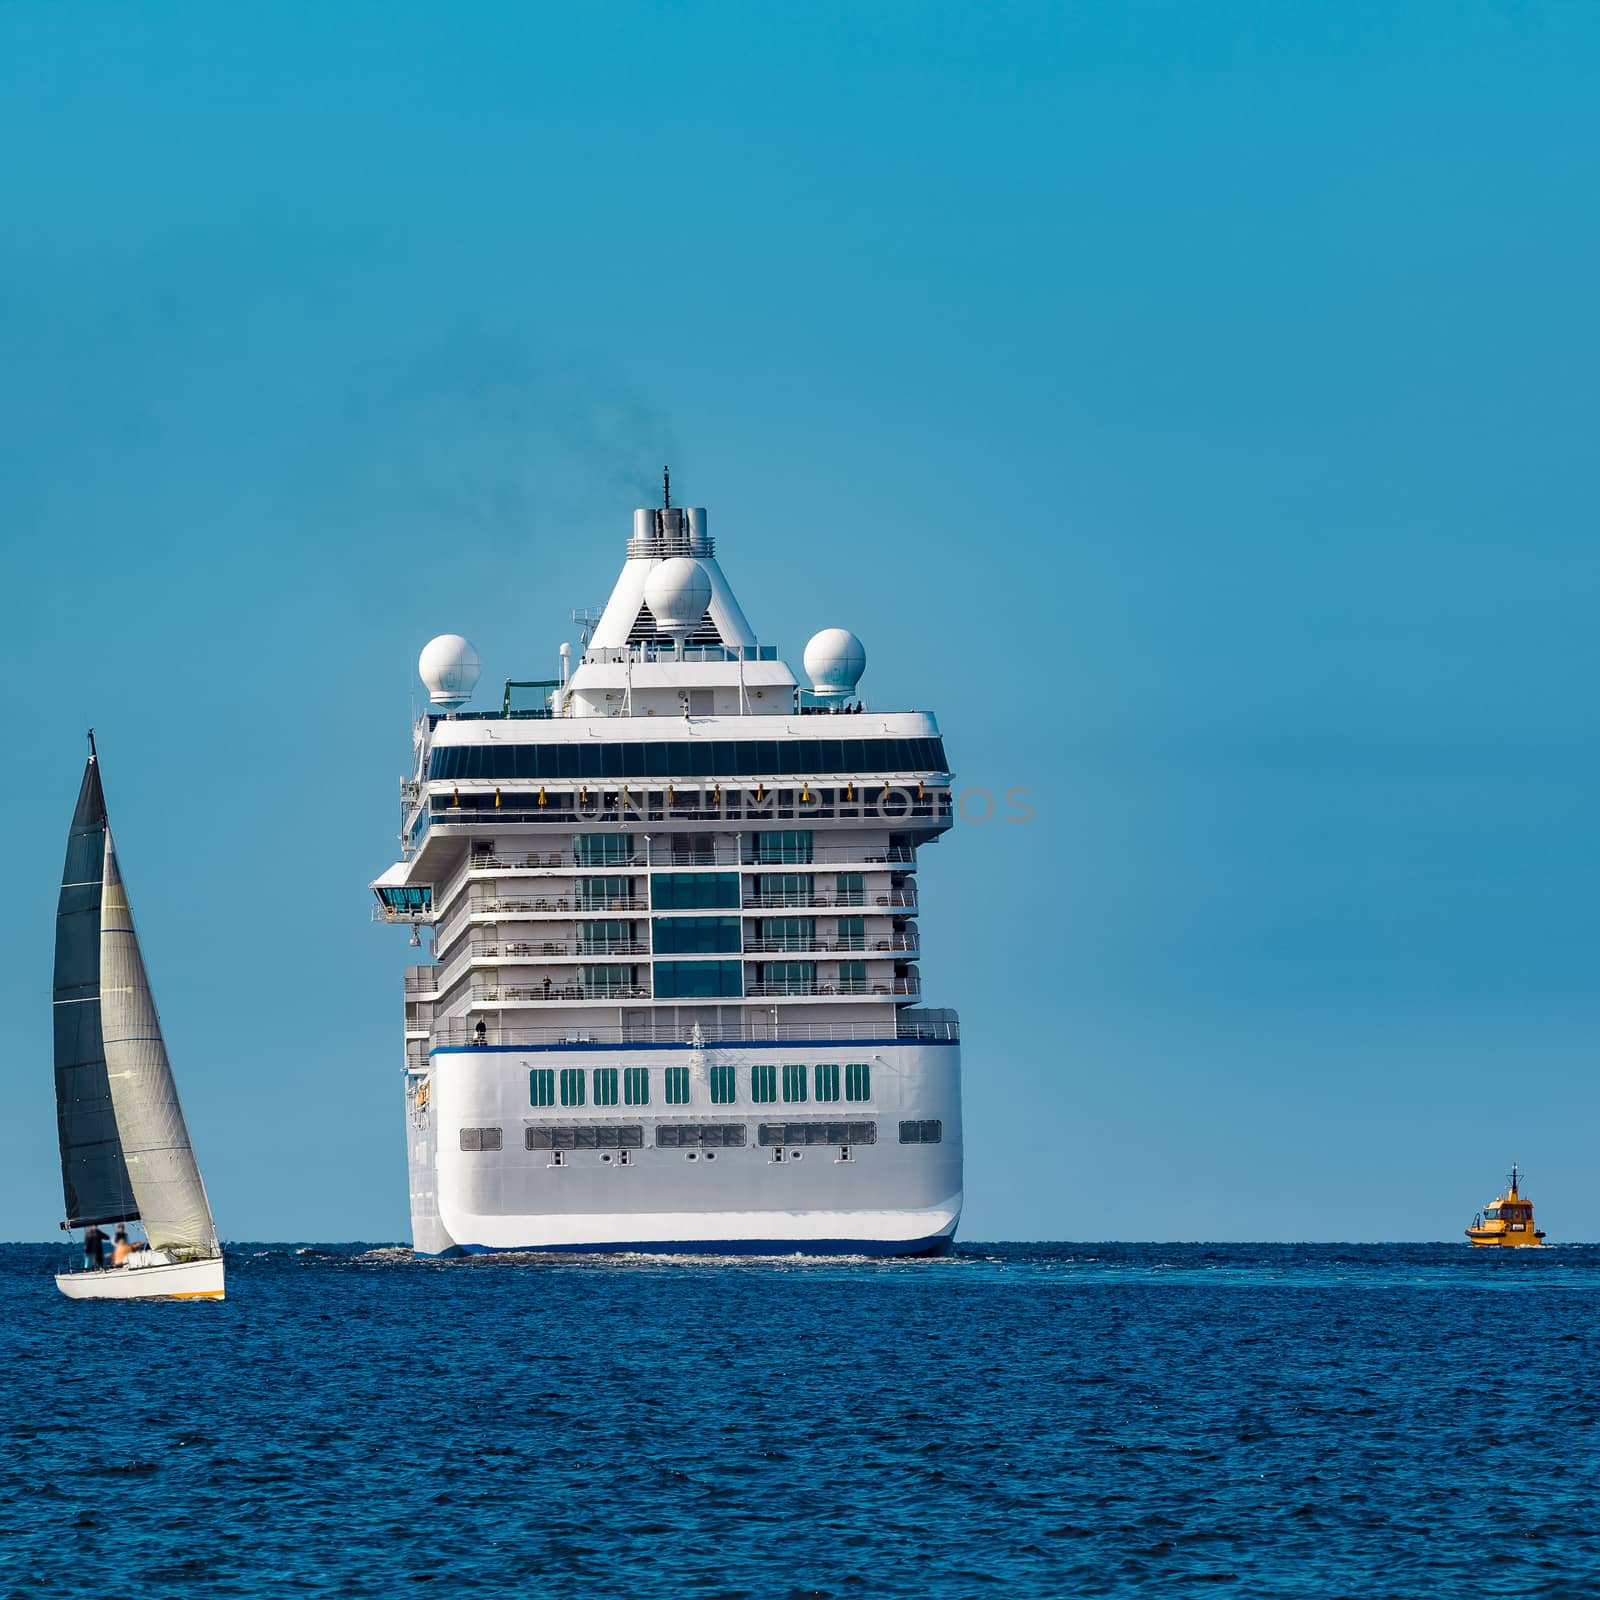 Luxury cruise liner in travel by sengnsp